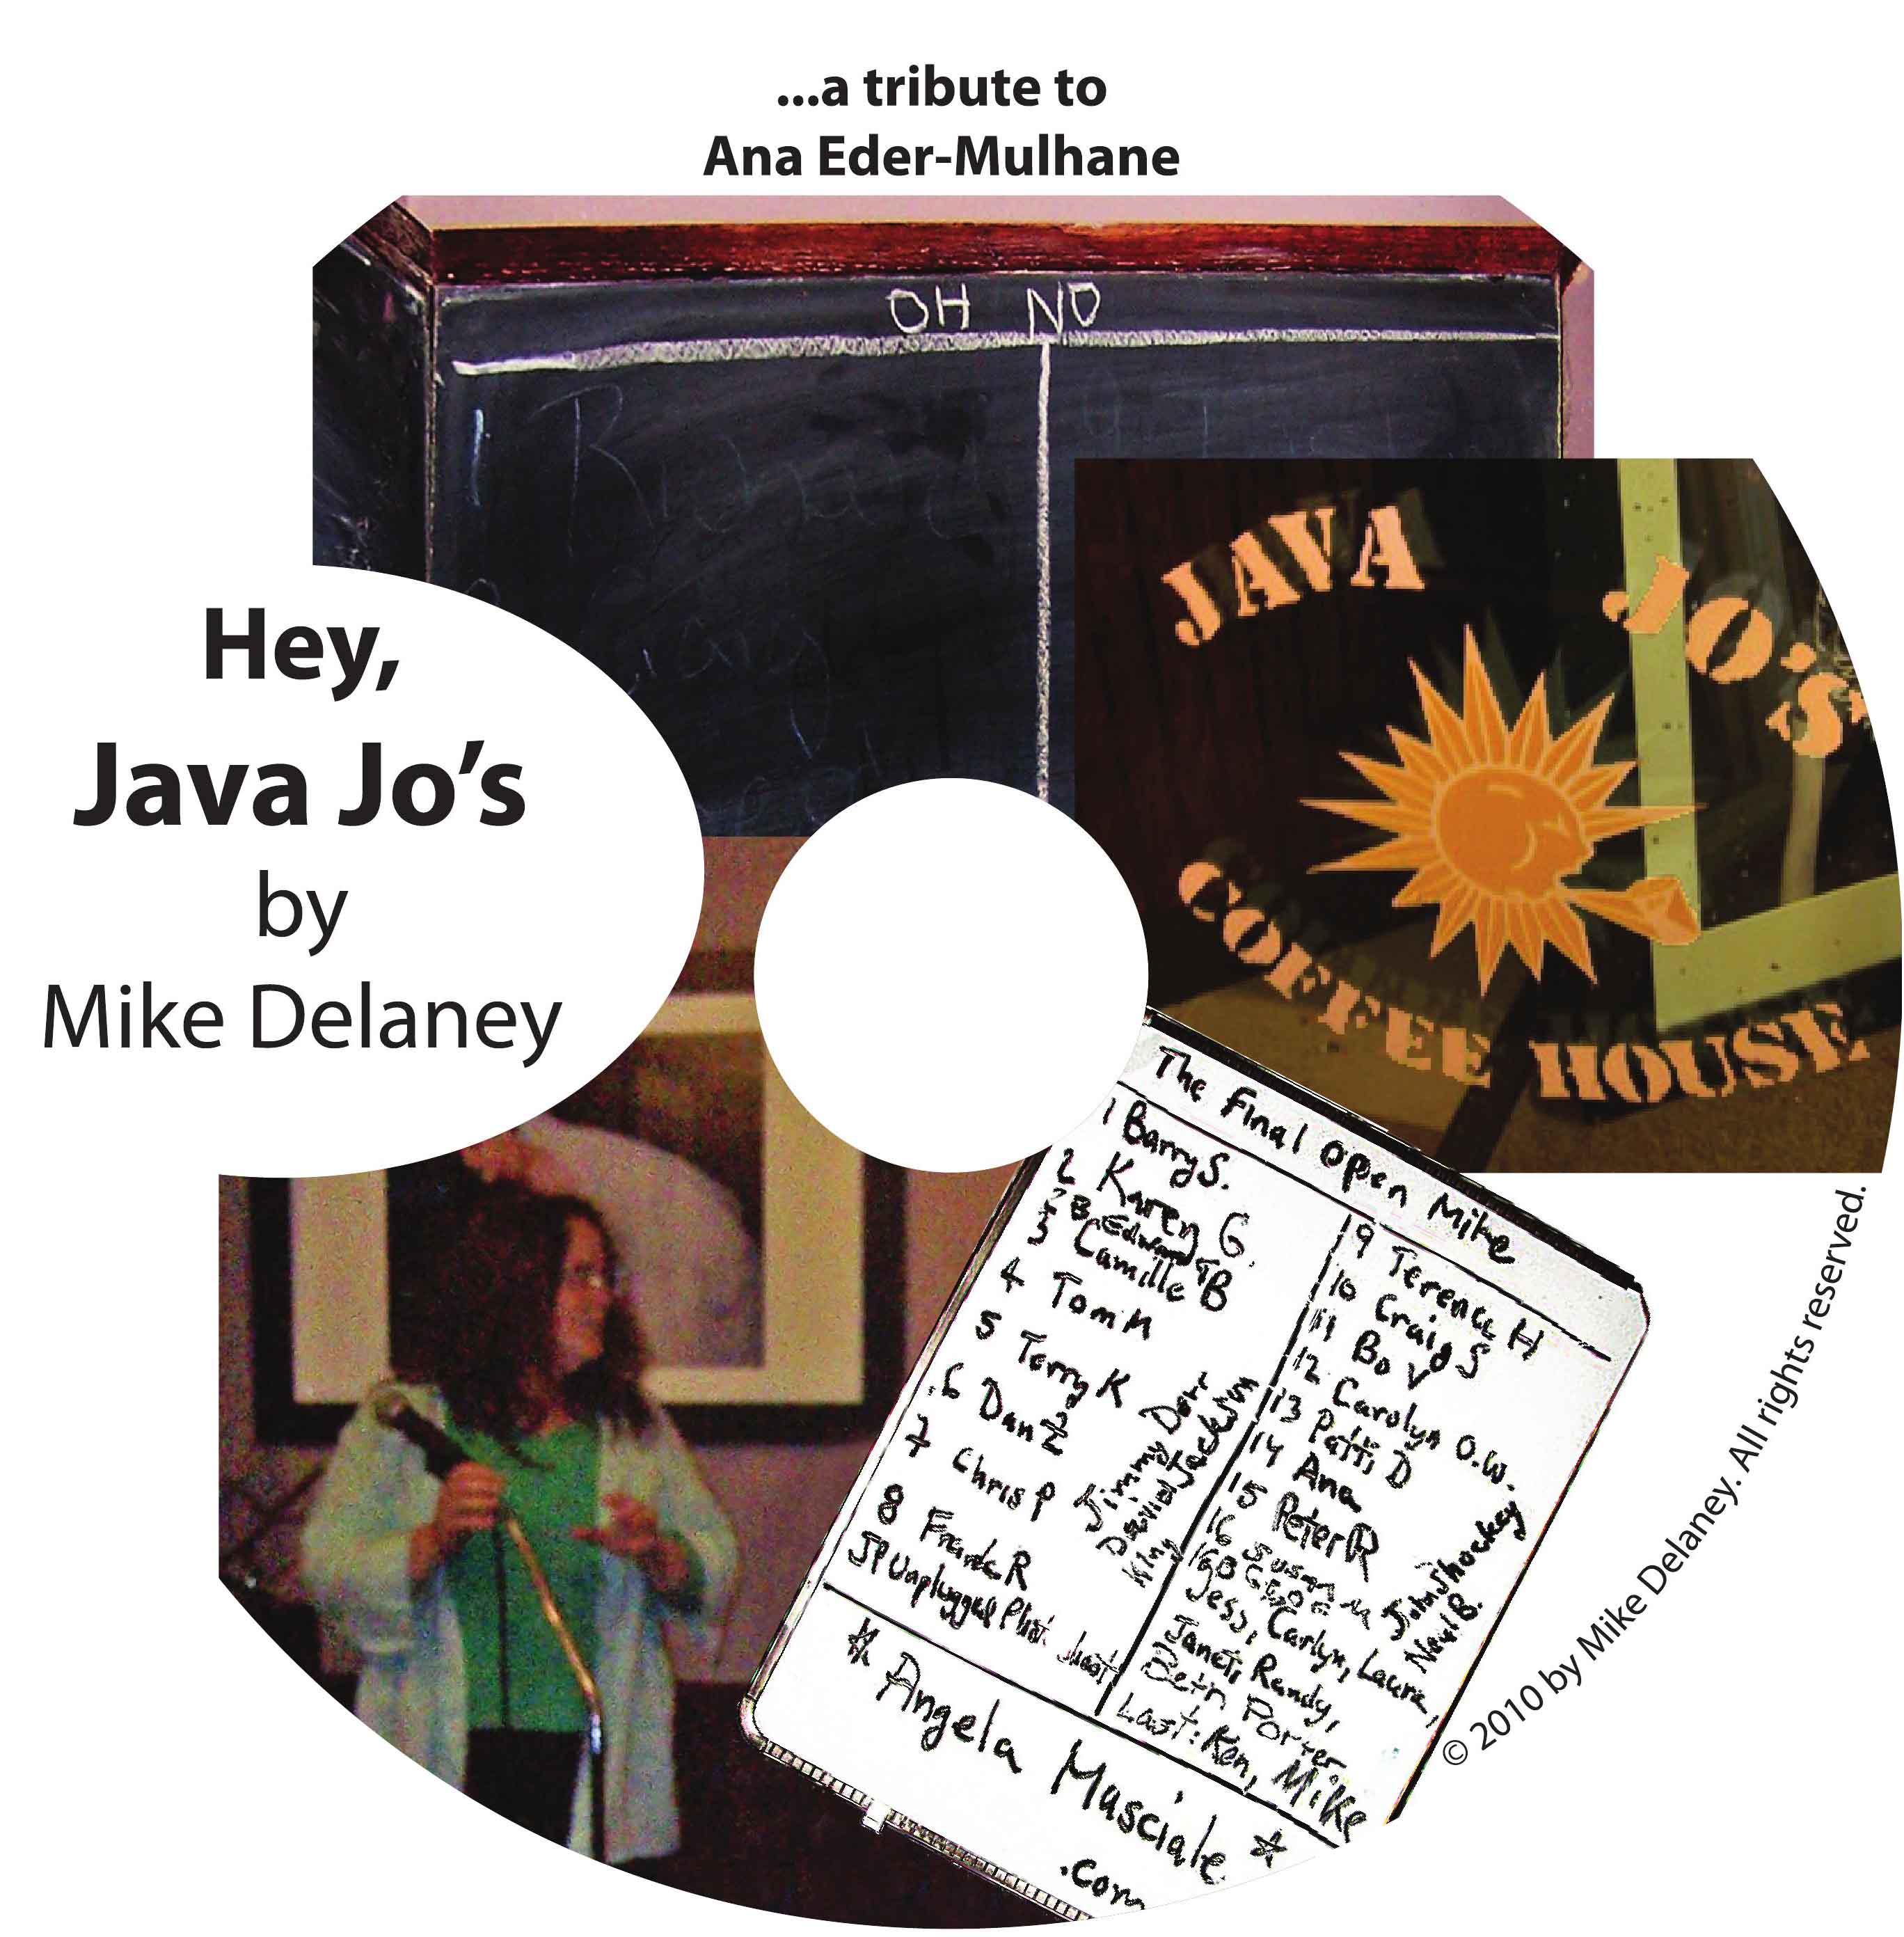 hey java jo's cd label - small.jpg